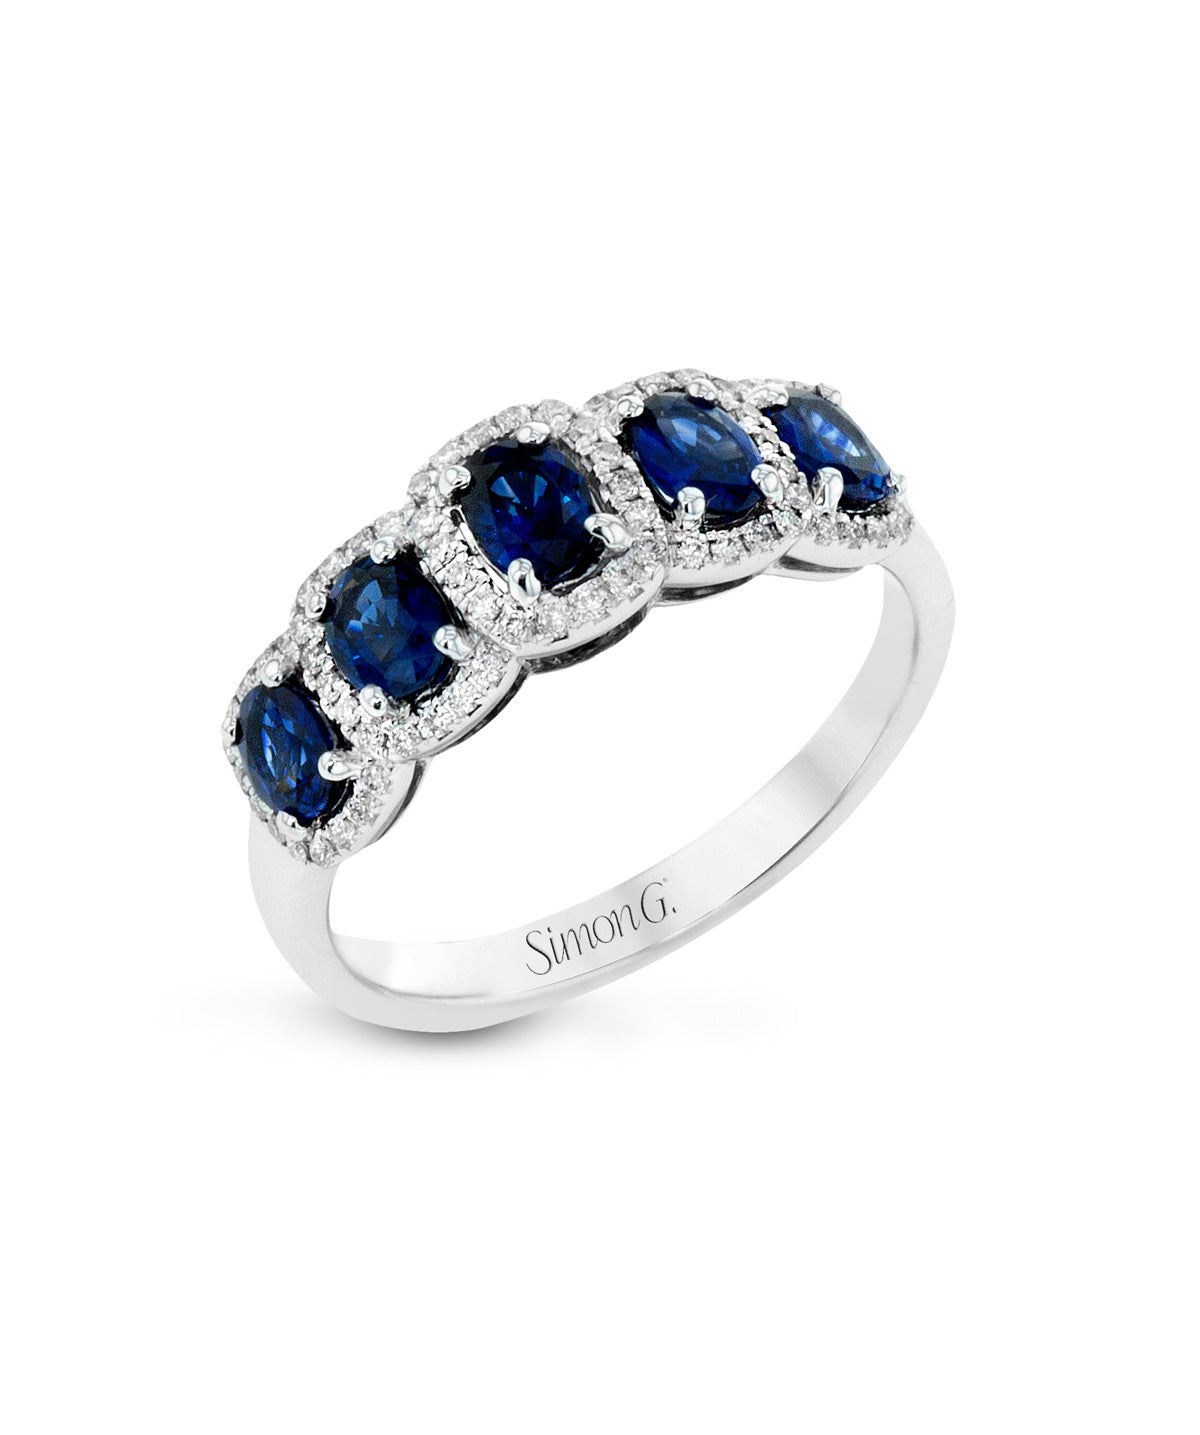 Simon G. - 18K White Gold Diamond and Sapphire Ring